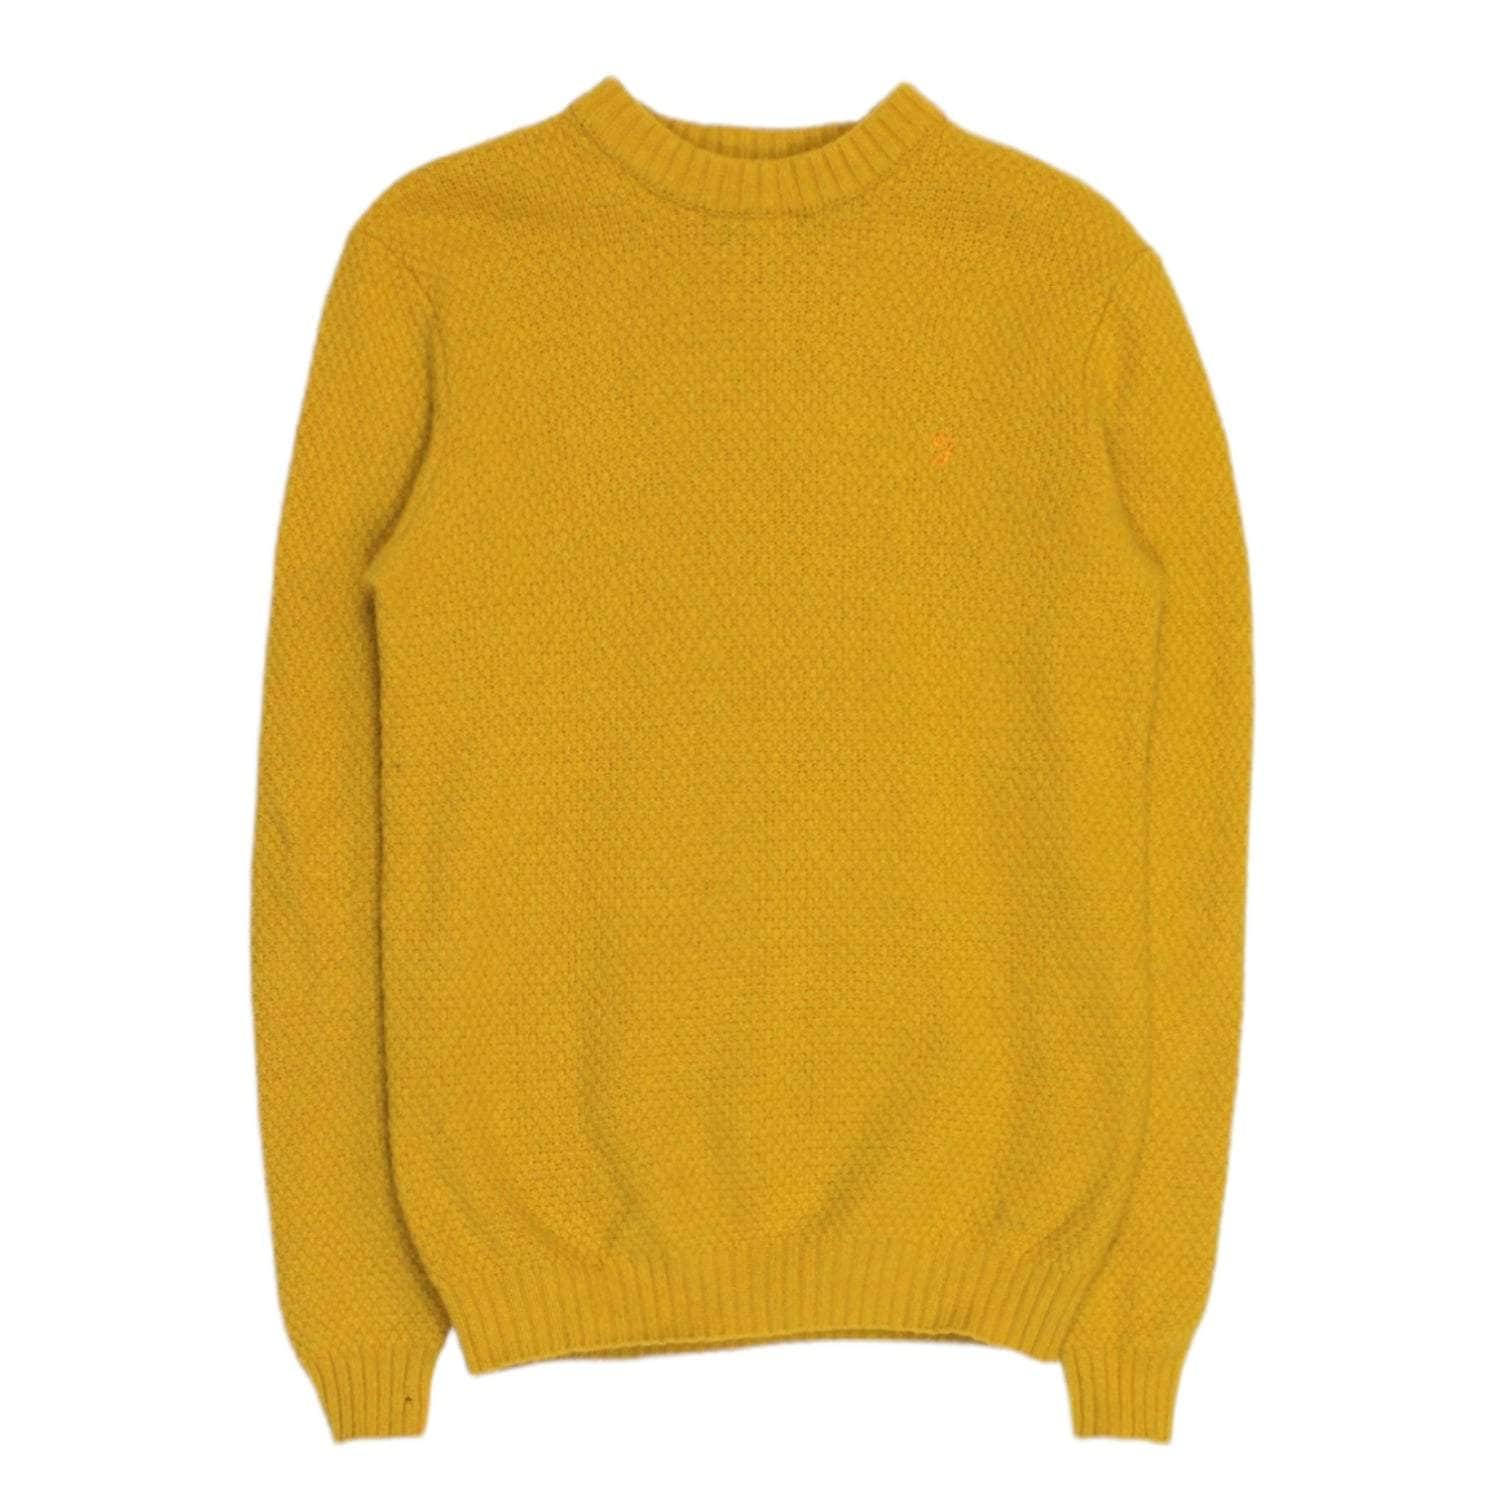 Farah Yellow Knitted Wool Jumper